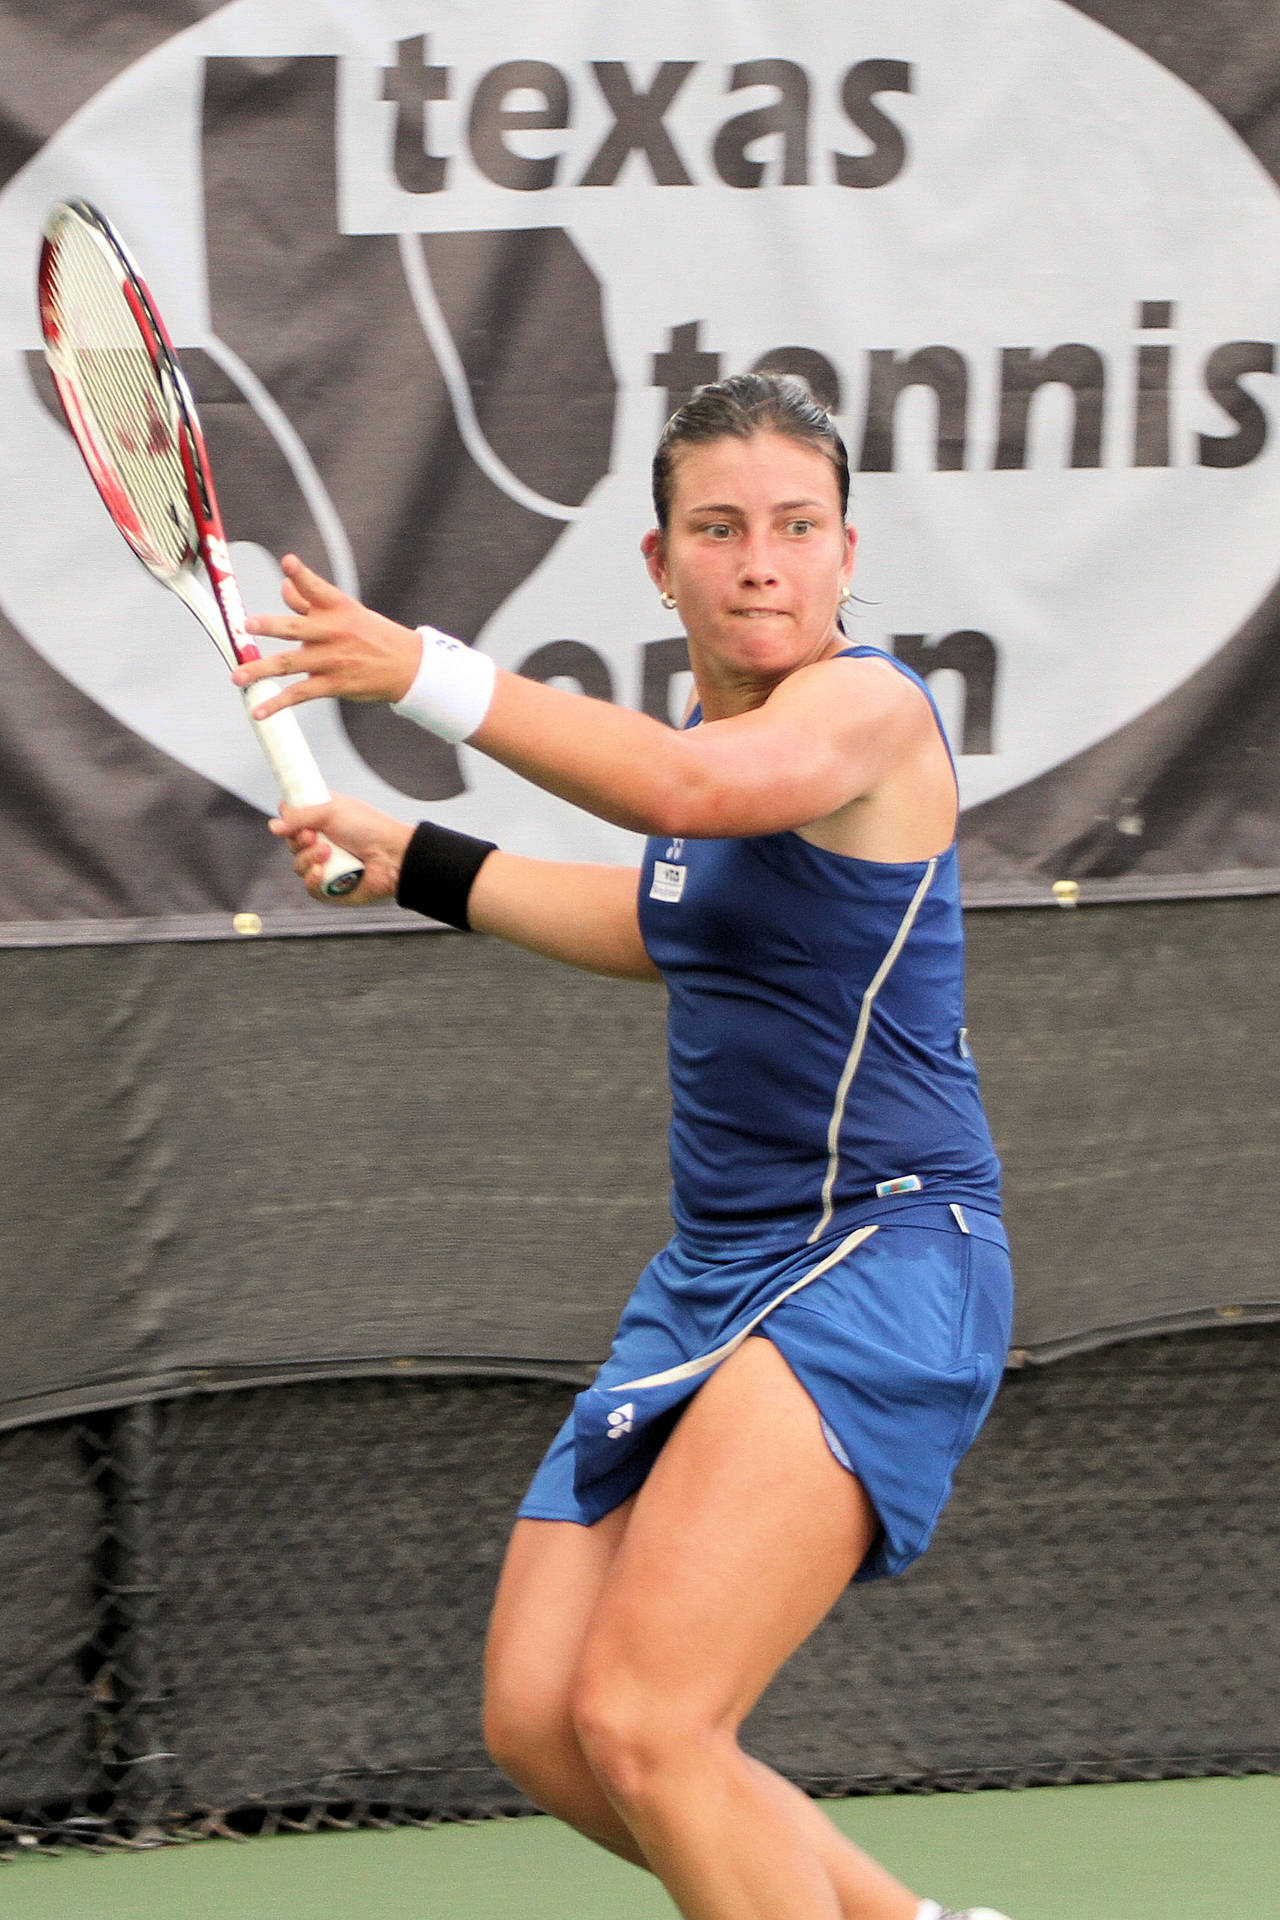 Anastasija Sevastova in action during a tennis match. Wallpaper